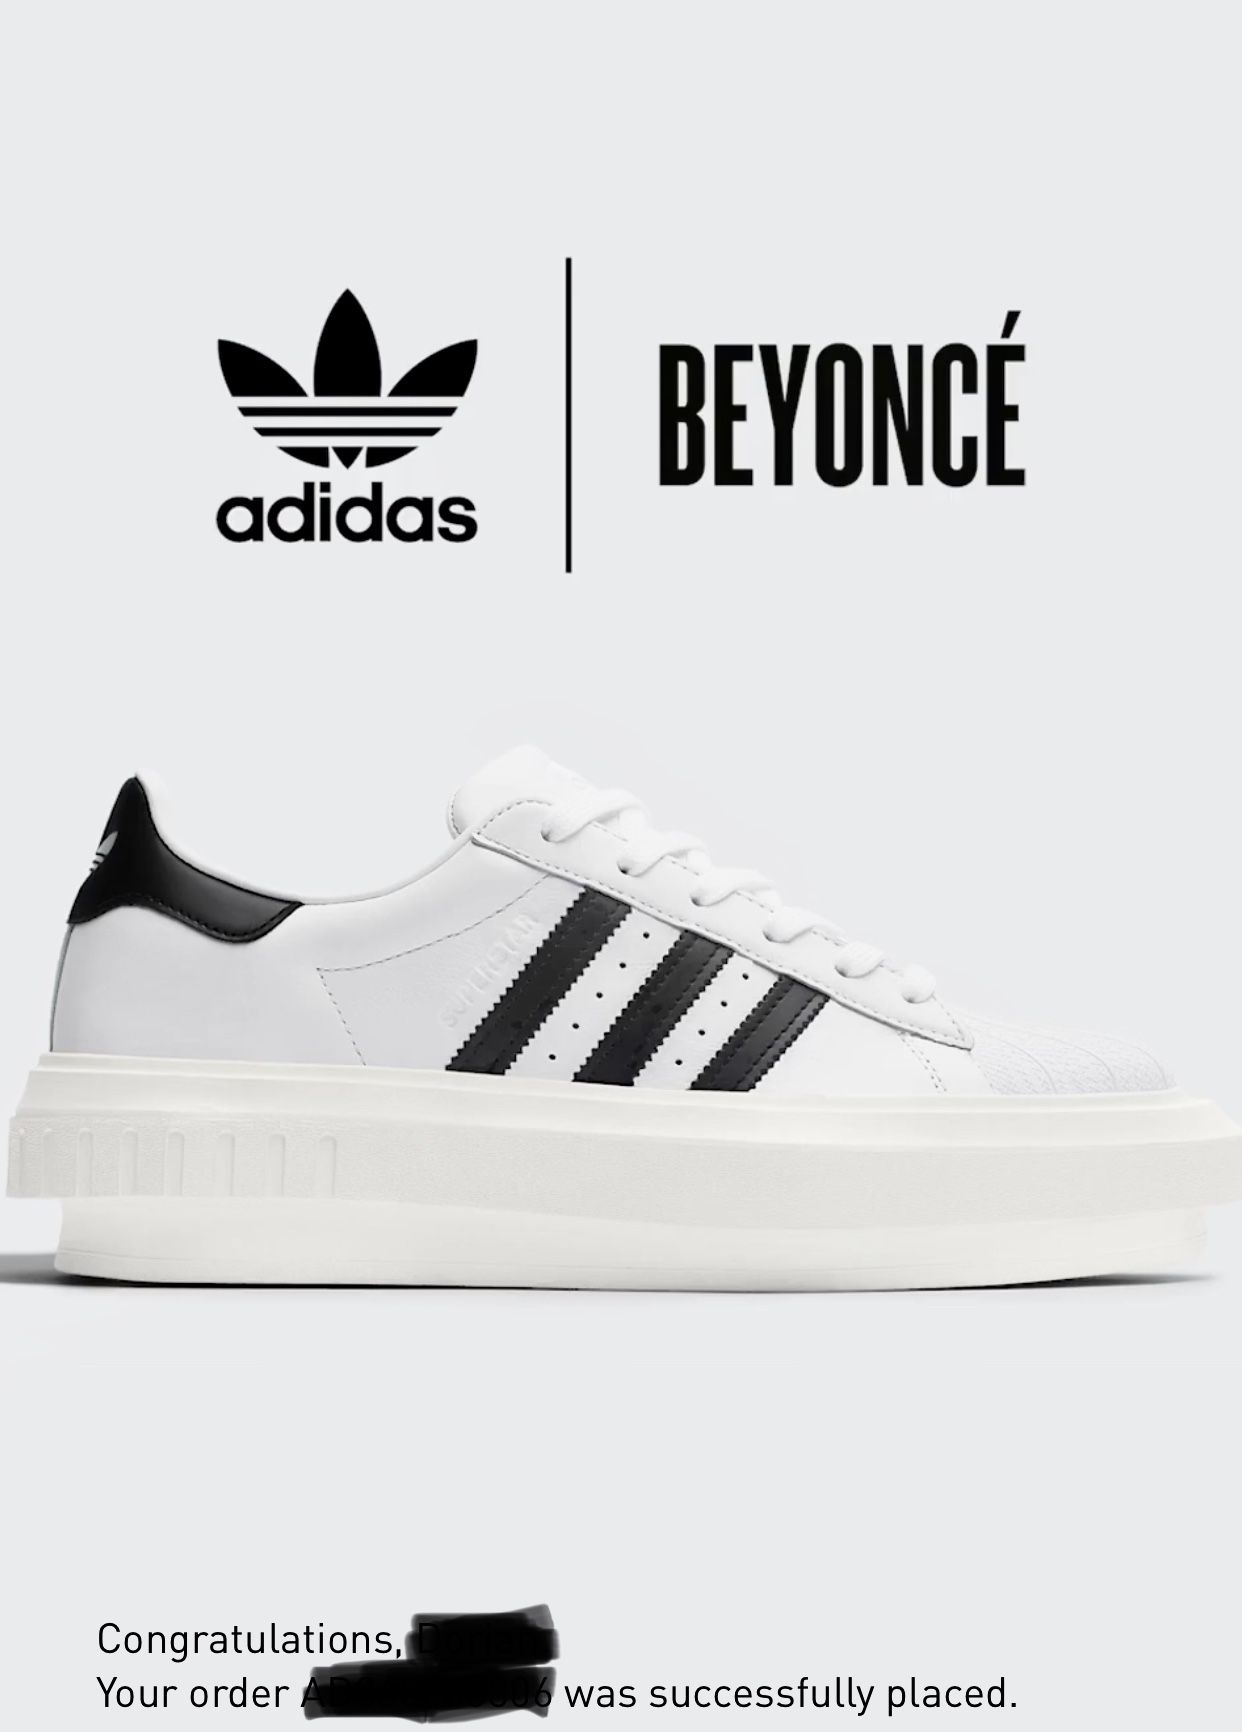 Adidas Beyoncé Superstar size 9 in women’s